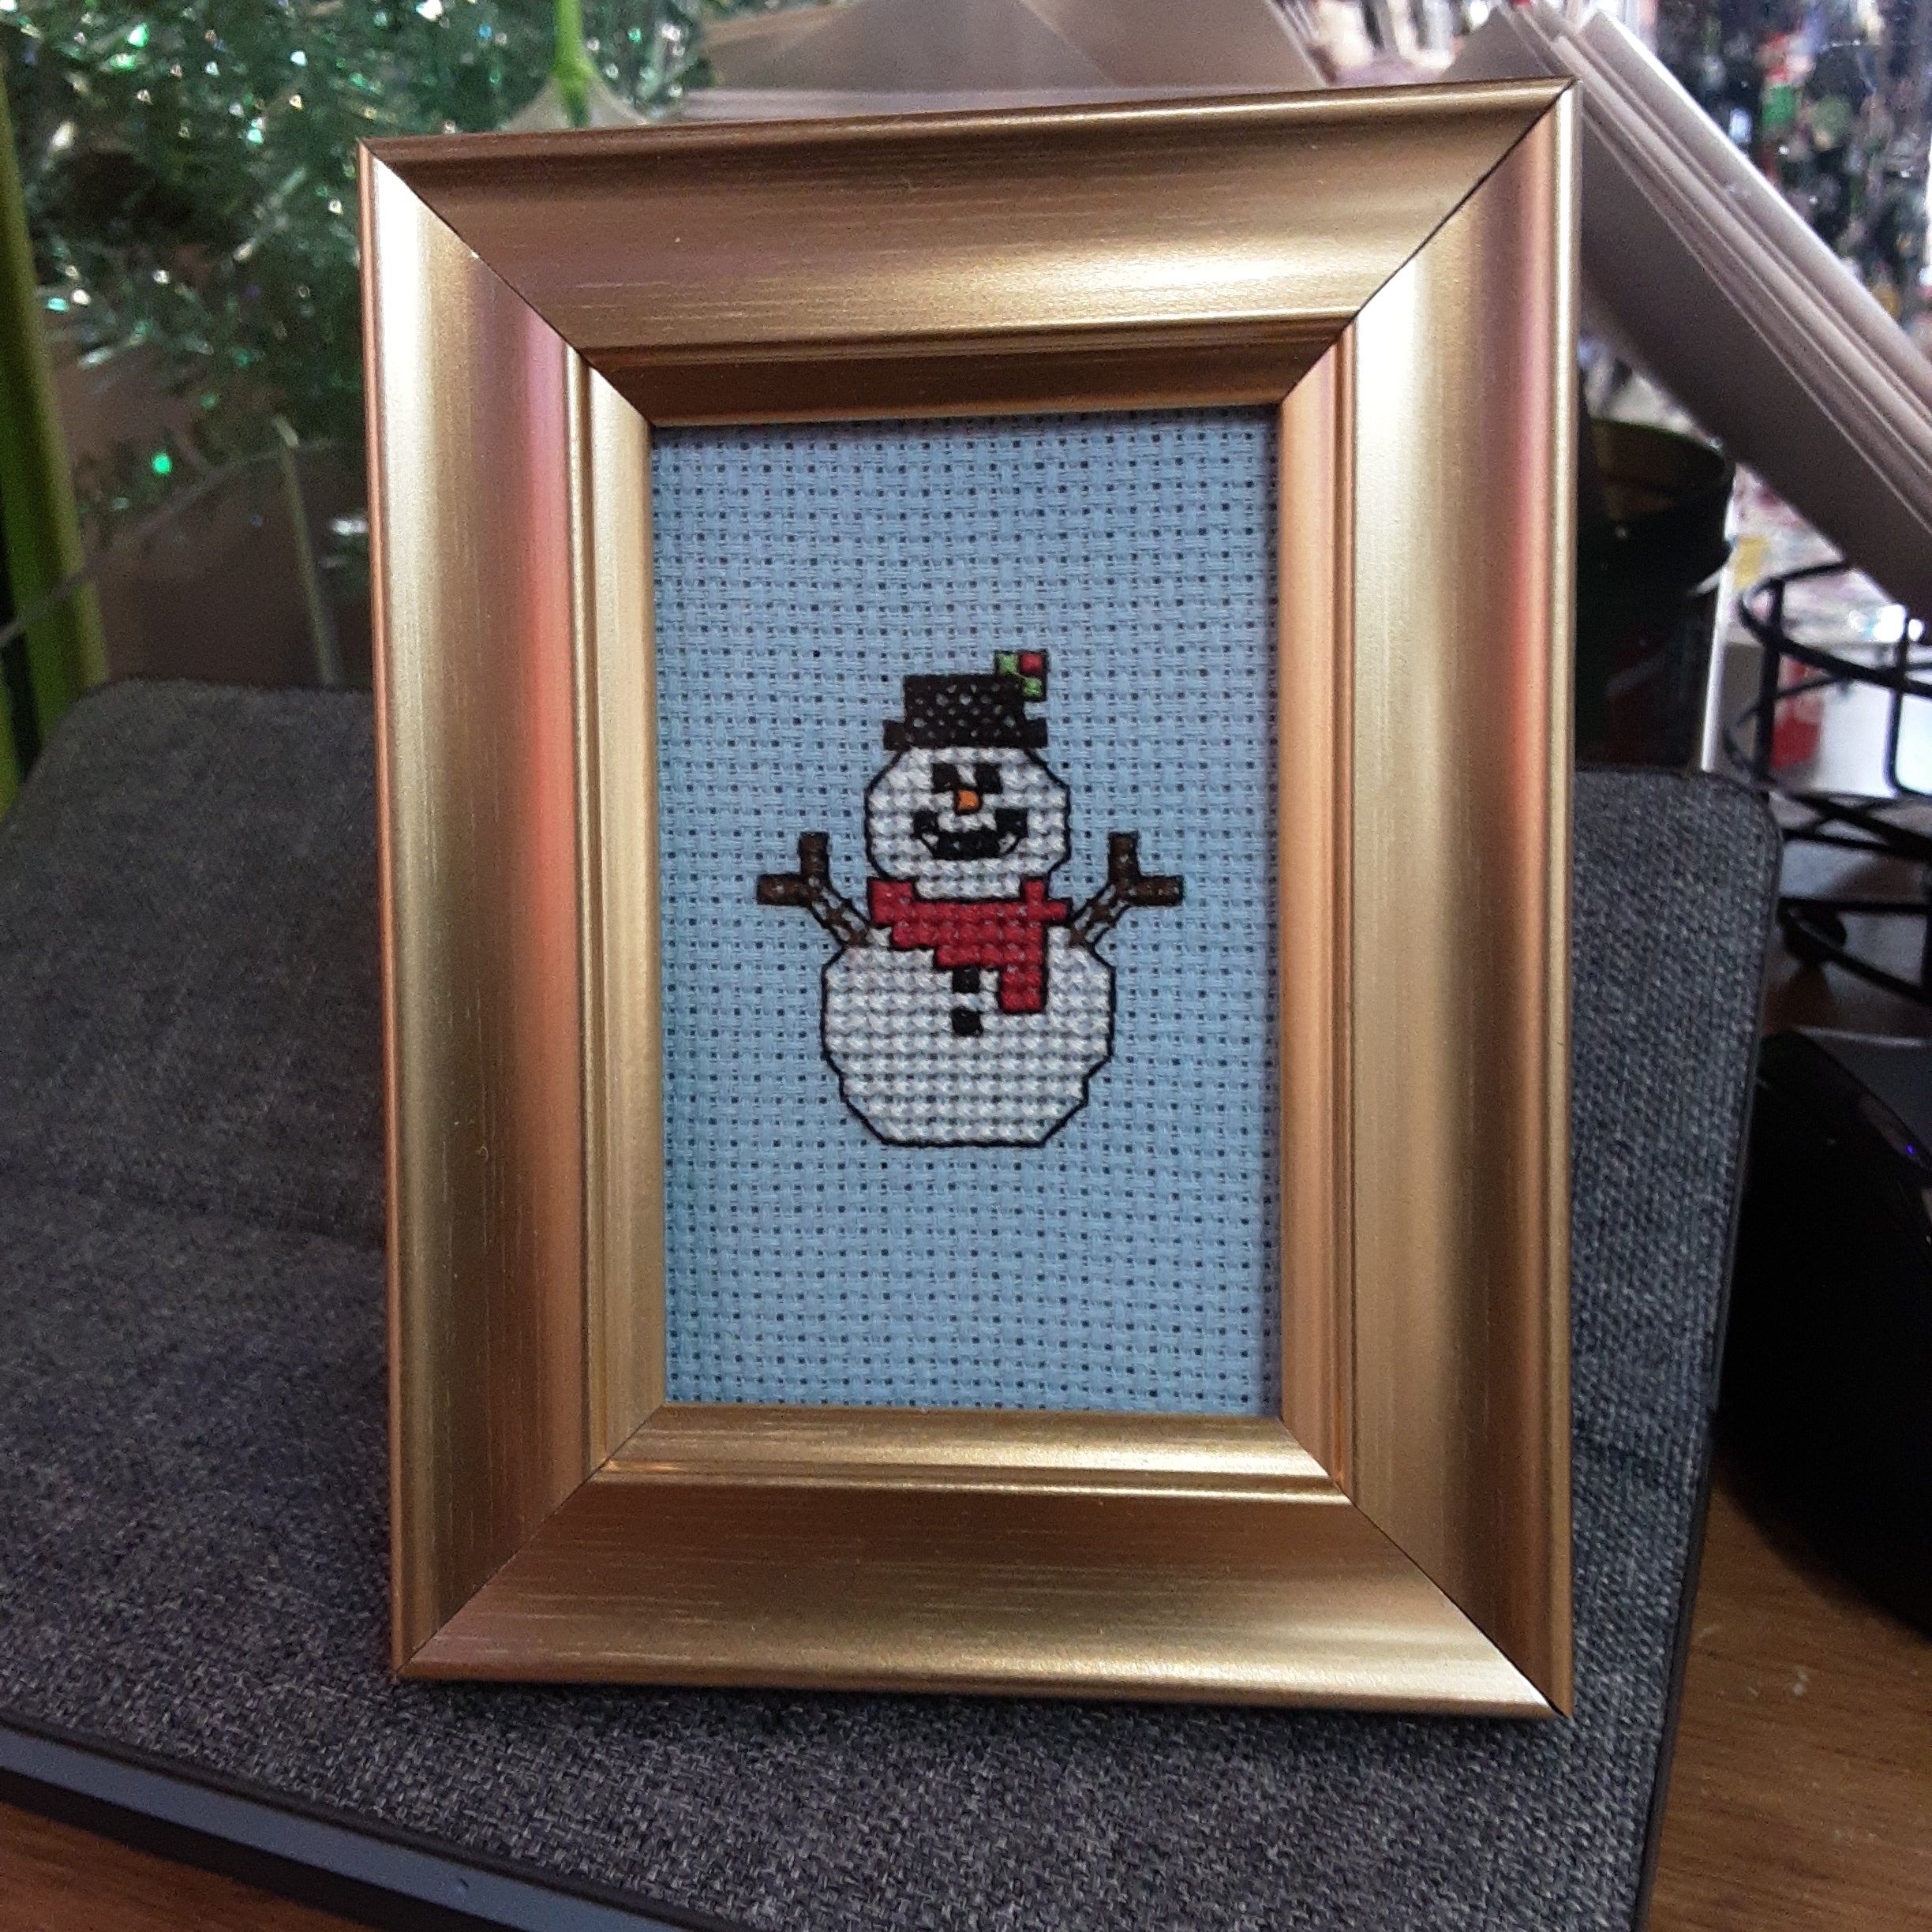 Snow man Framed Cross-Stitch